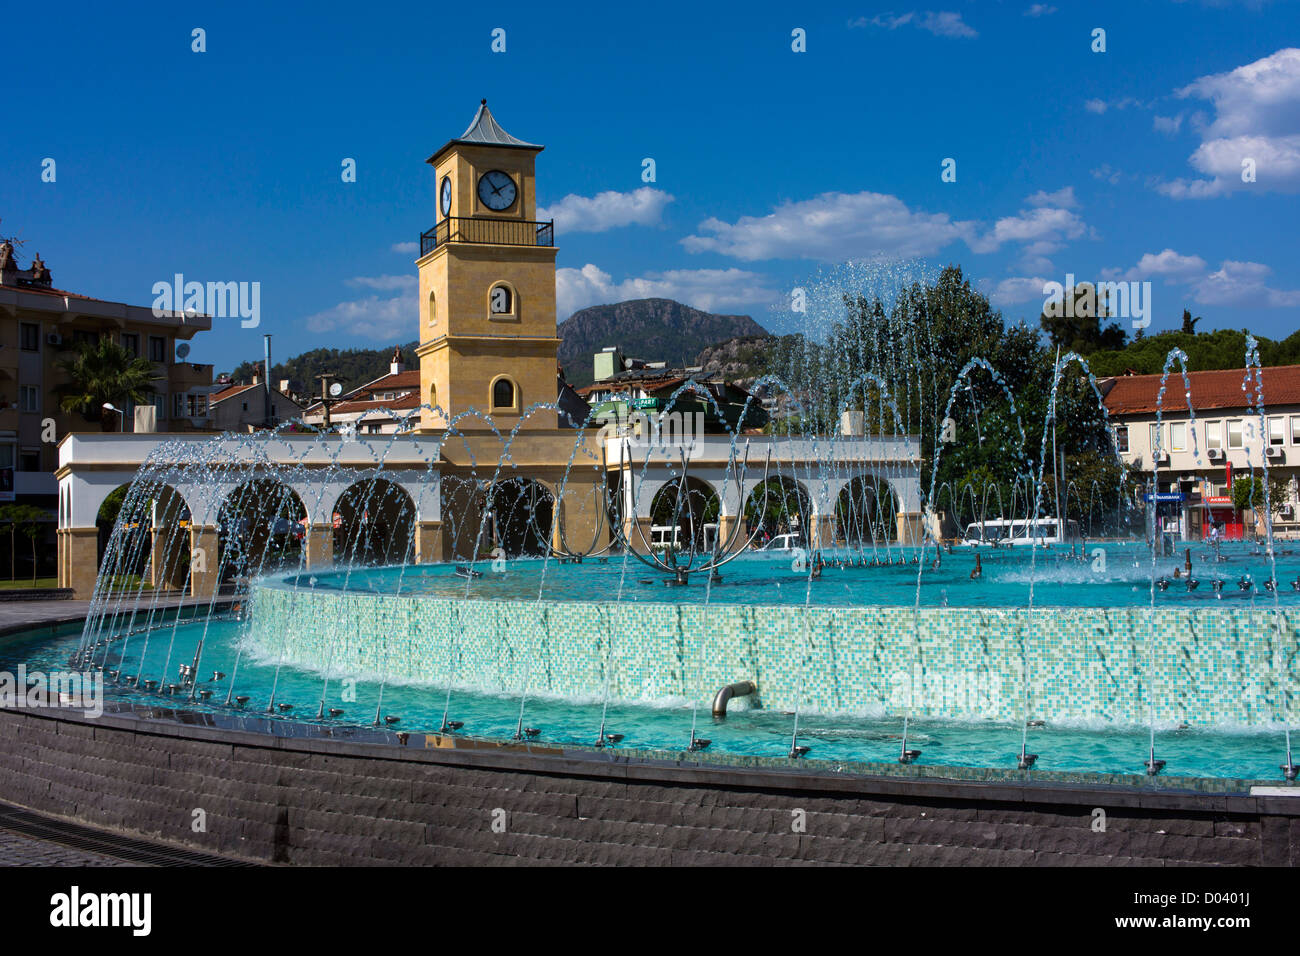 Fountain and public buildings, Marmaris, Turkey Stock Photo